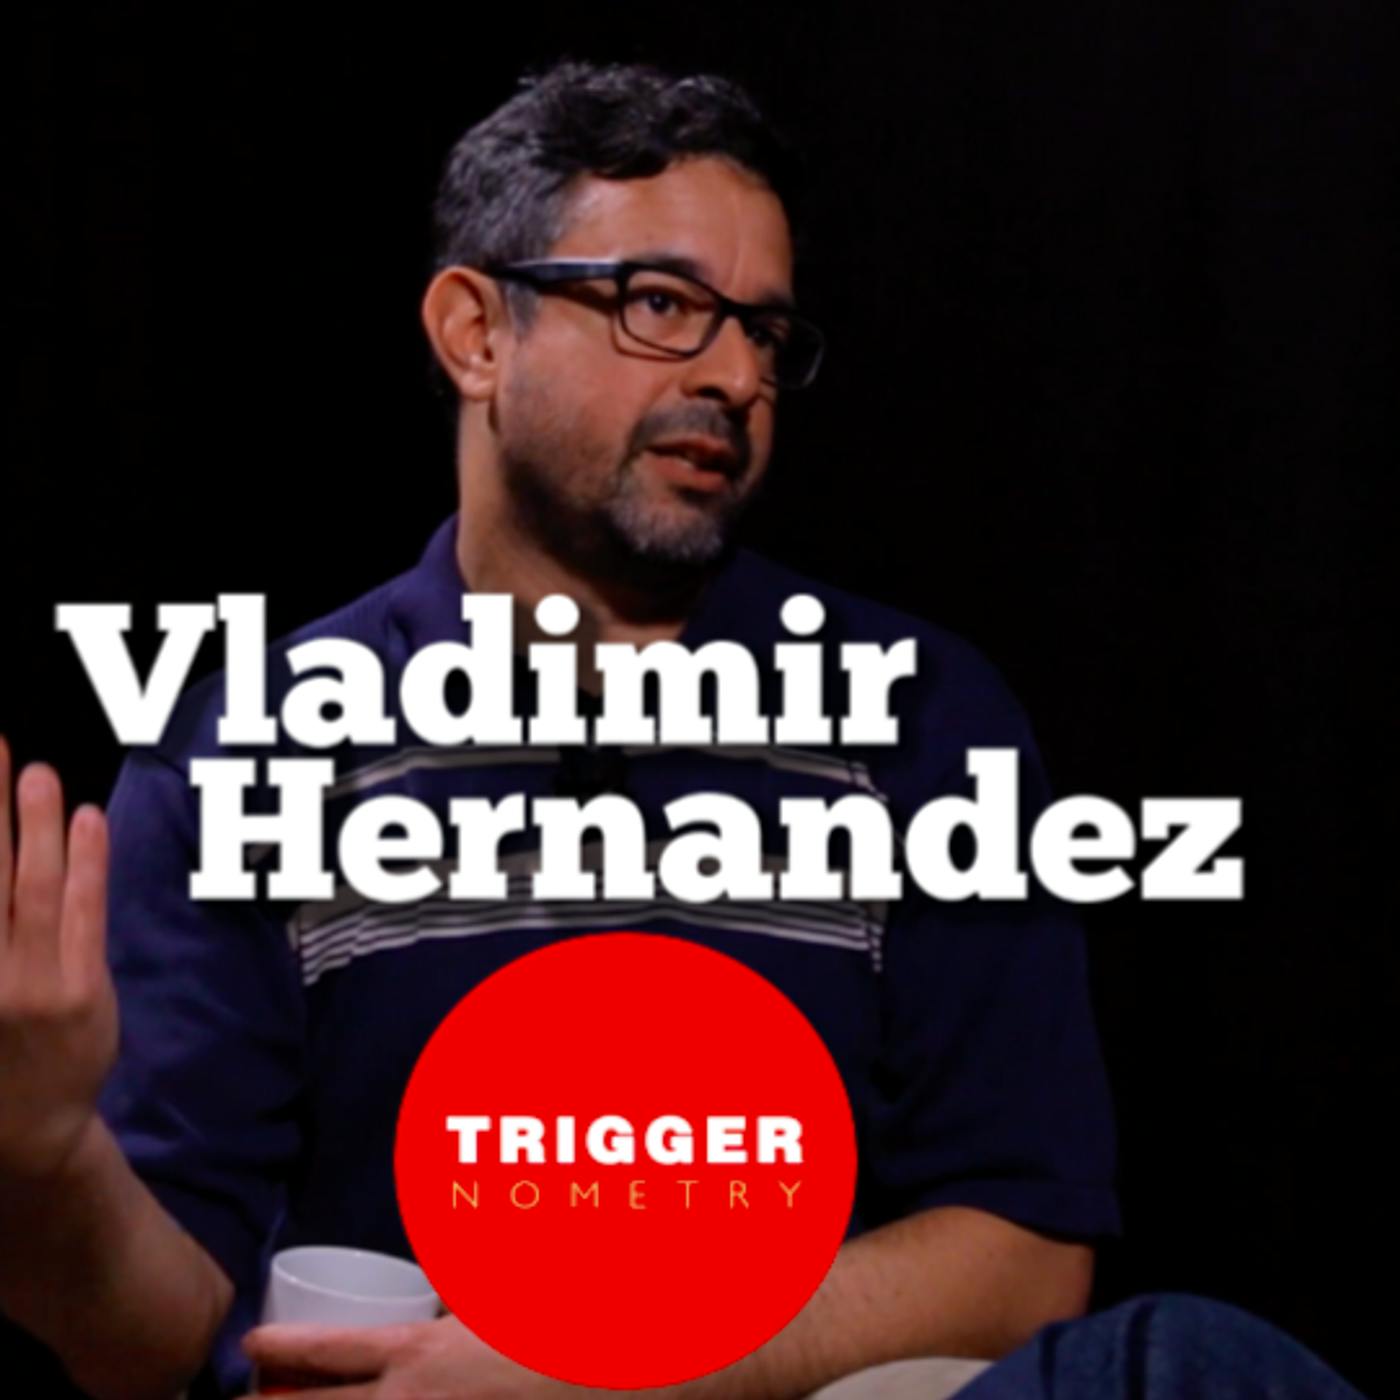 Vladimir Hernandez on Venezuela, Mexico and the War on Drugs